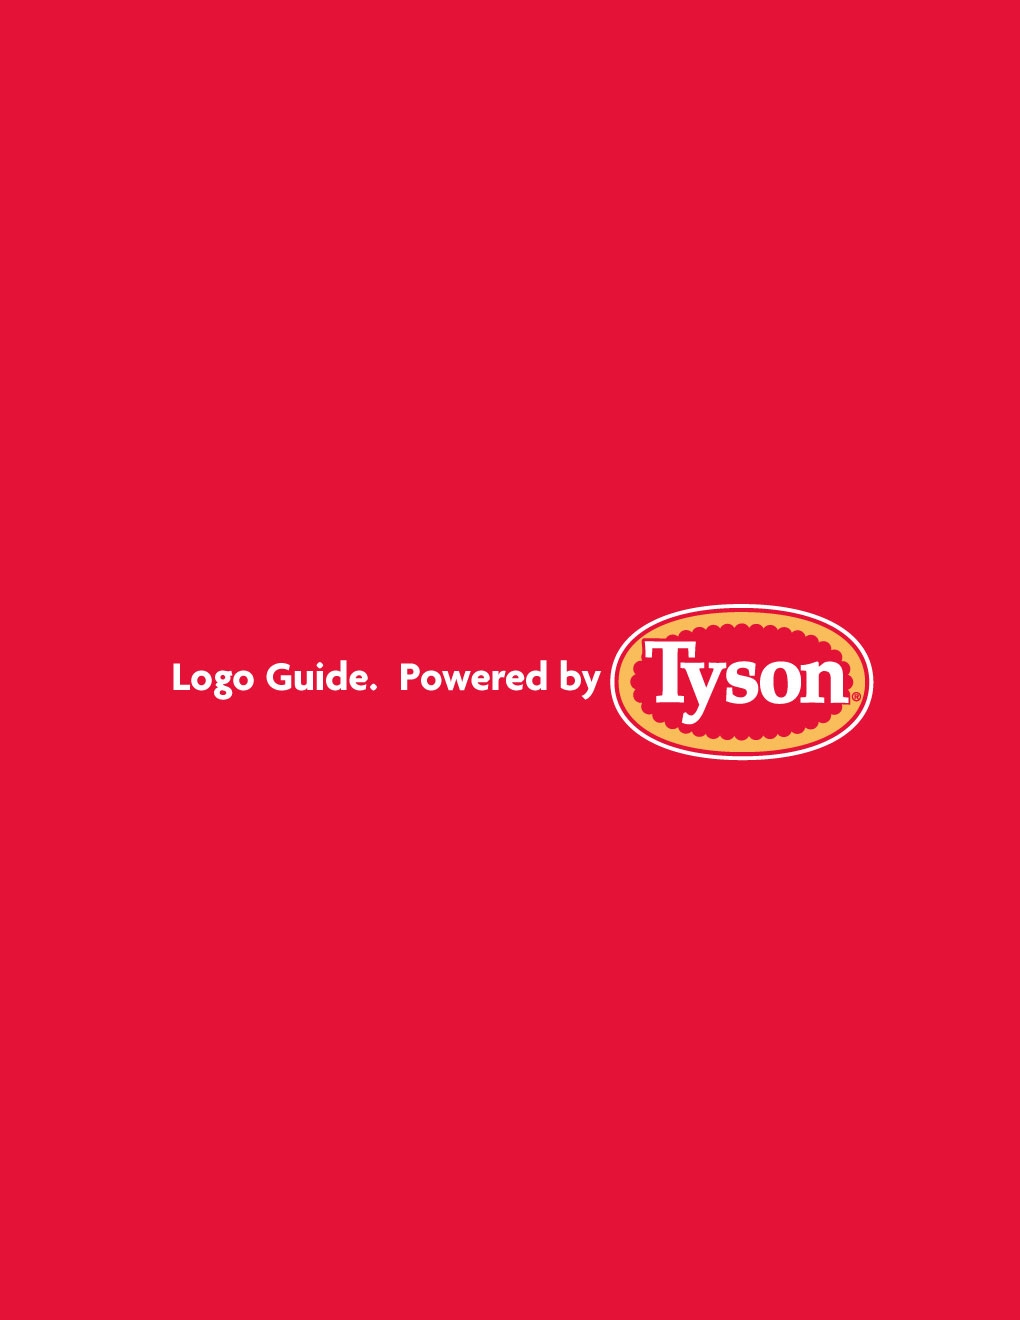 Tyson Logo Guide